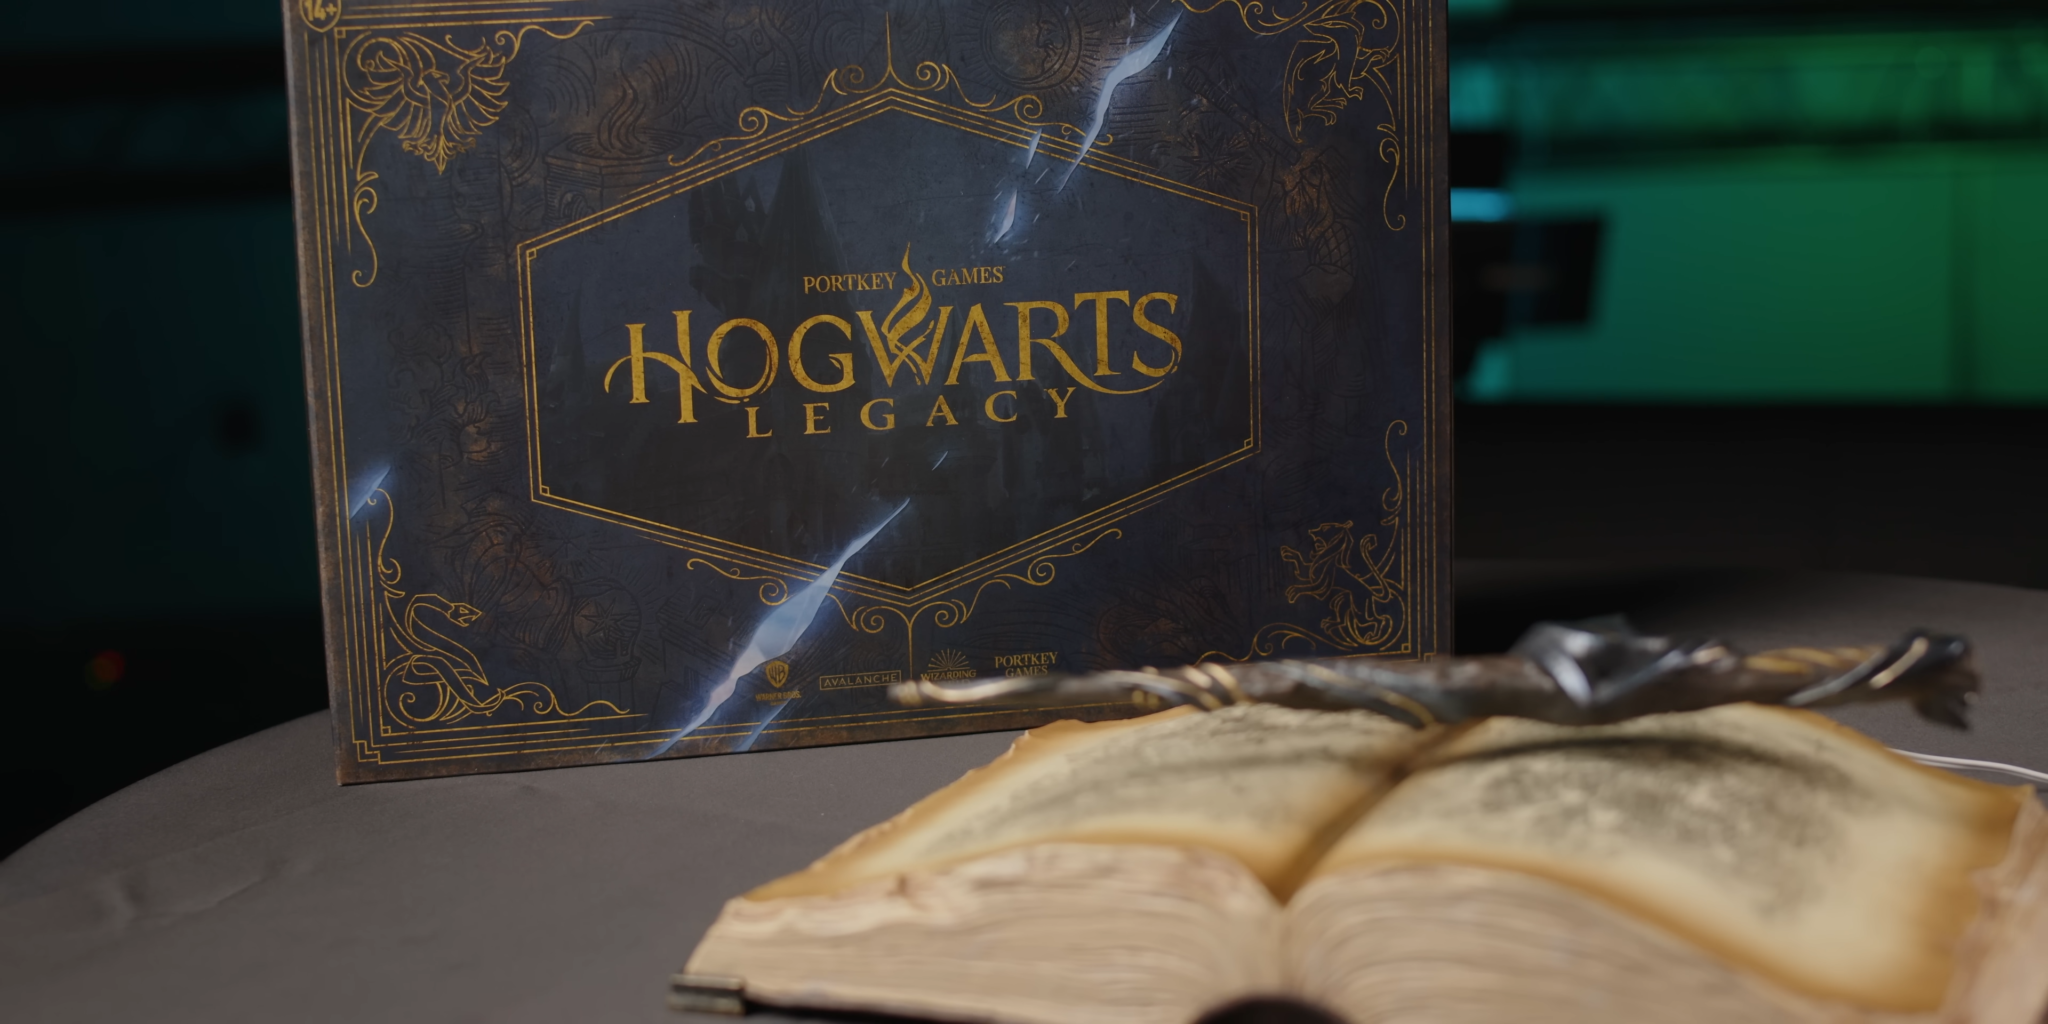 hogwarts legacy dark arts pack not showing up